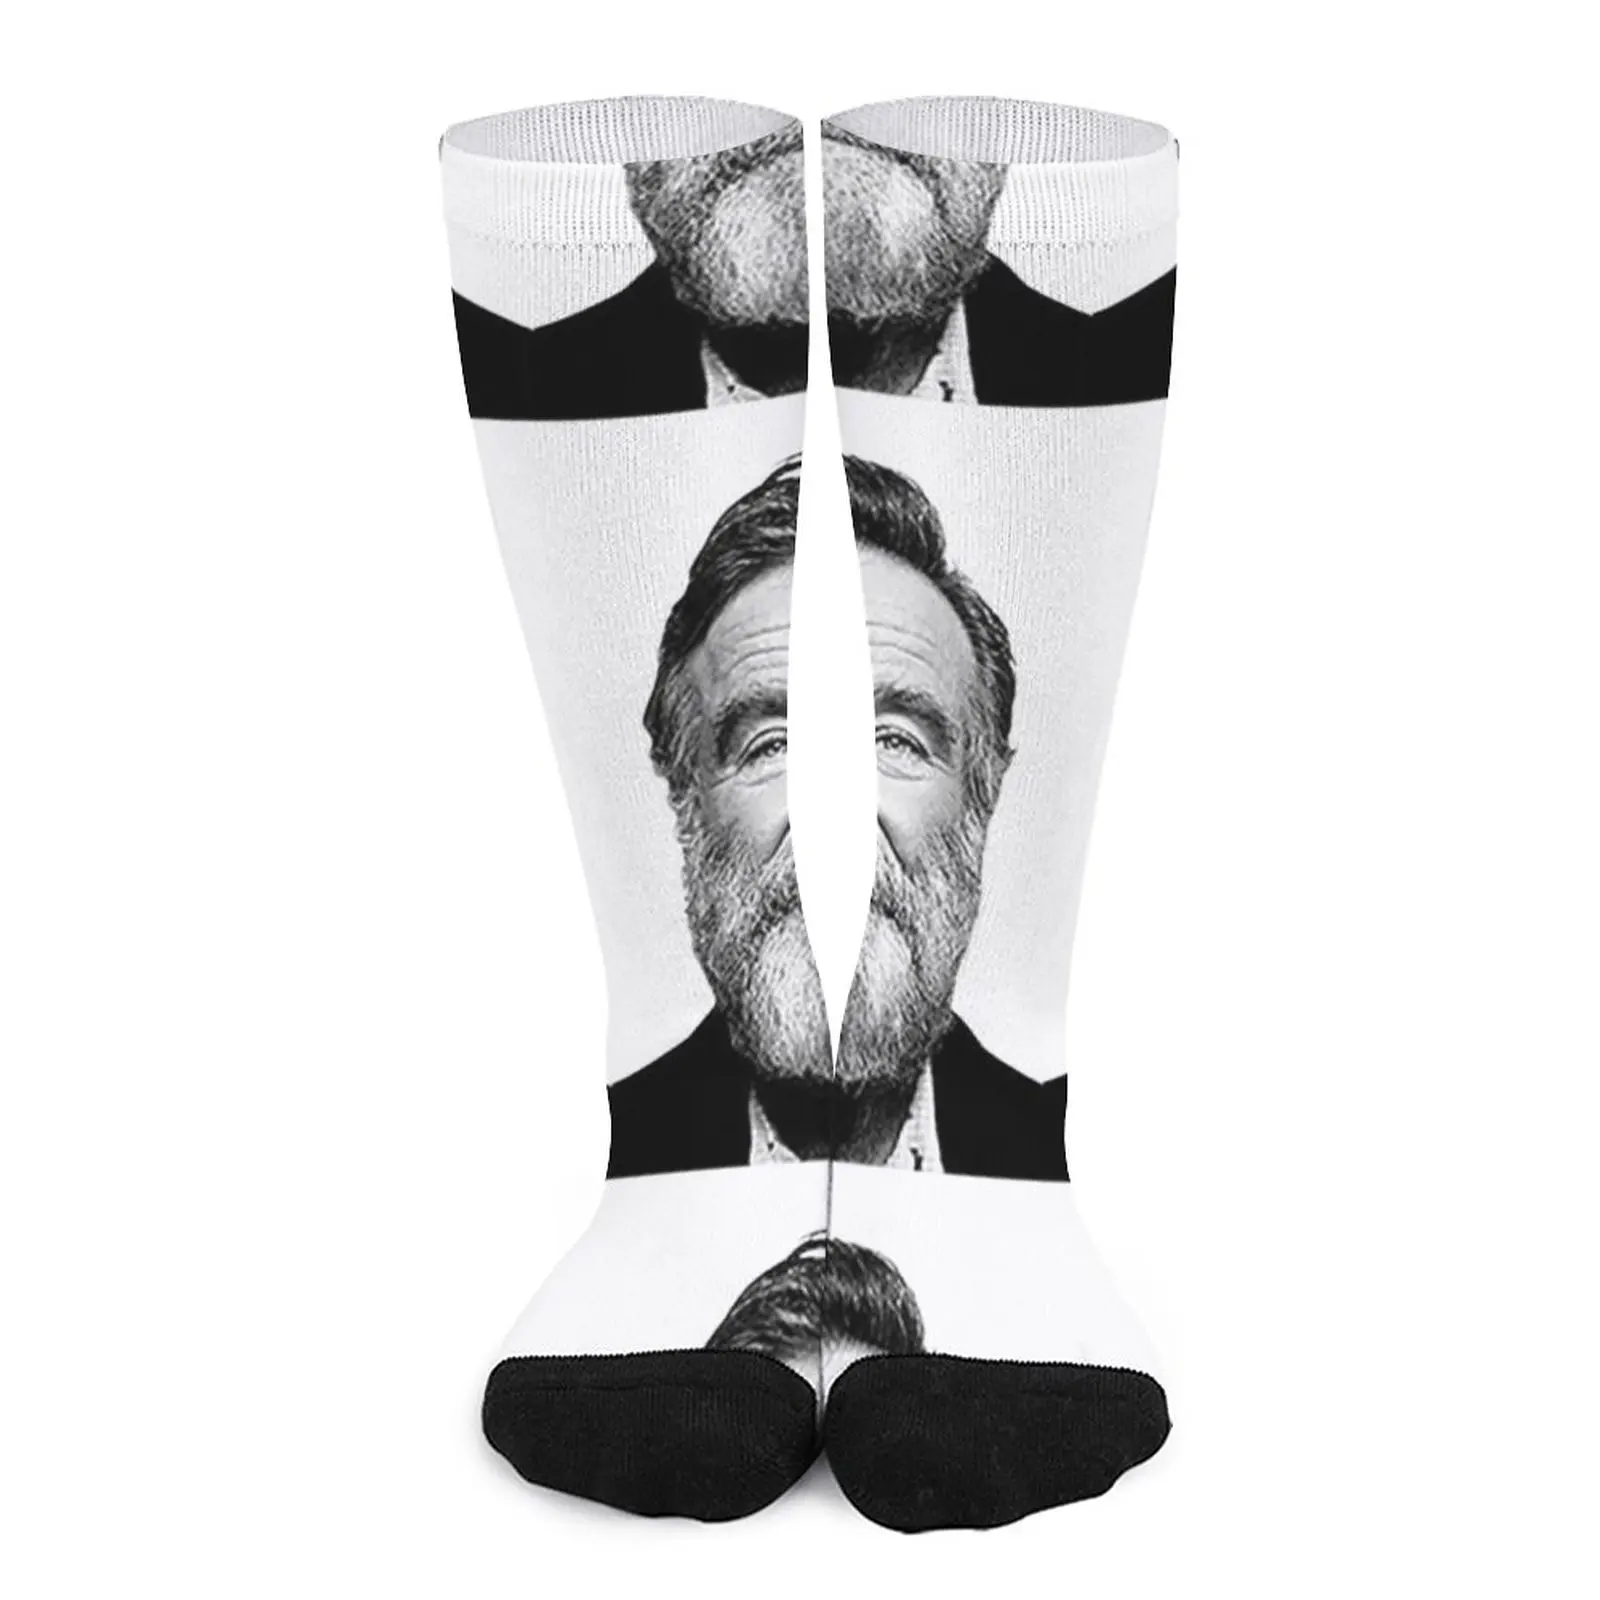 Robin Williams Socks Men's winter socks men socks winter socks men Stockings compression williams robbie intensive car 1 cd